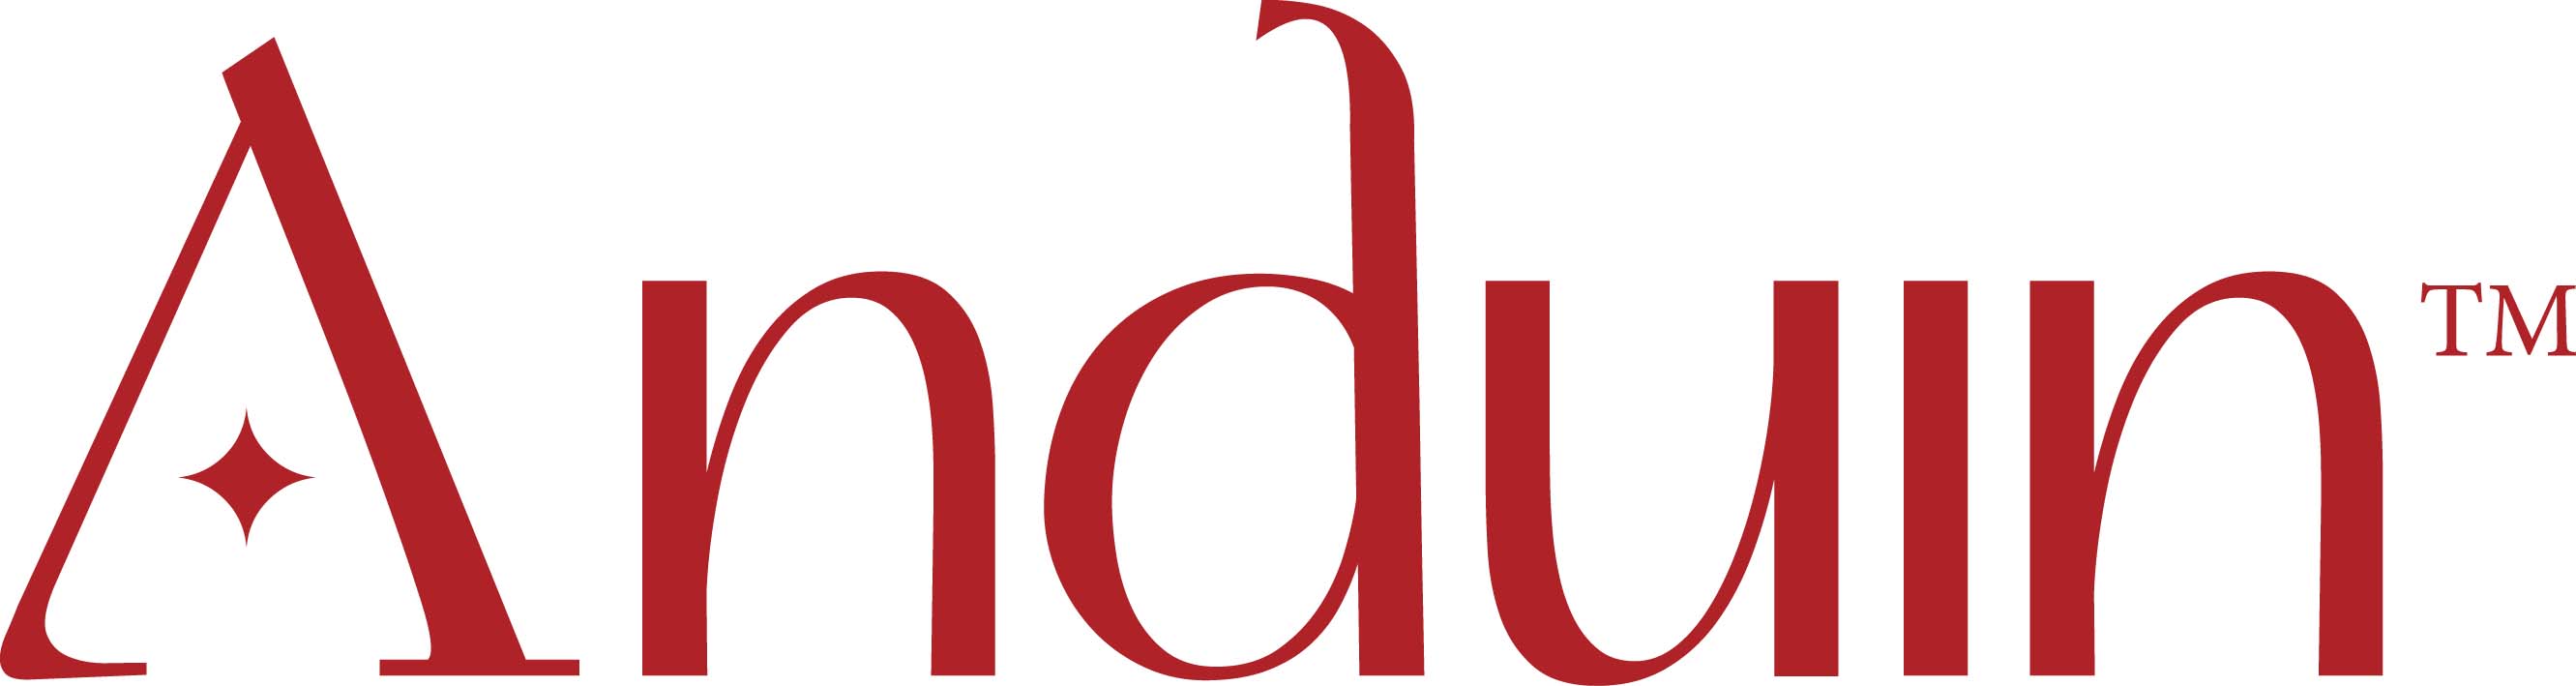 Anduin logo